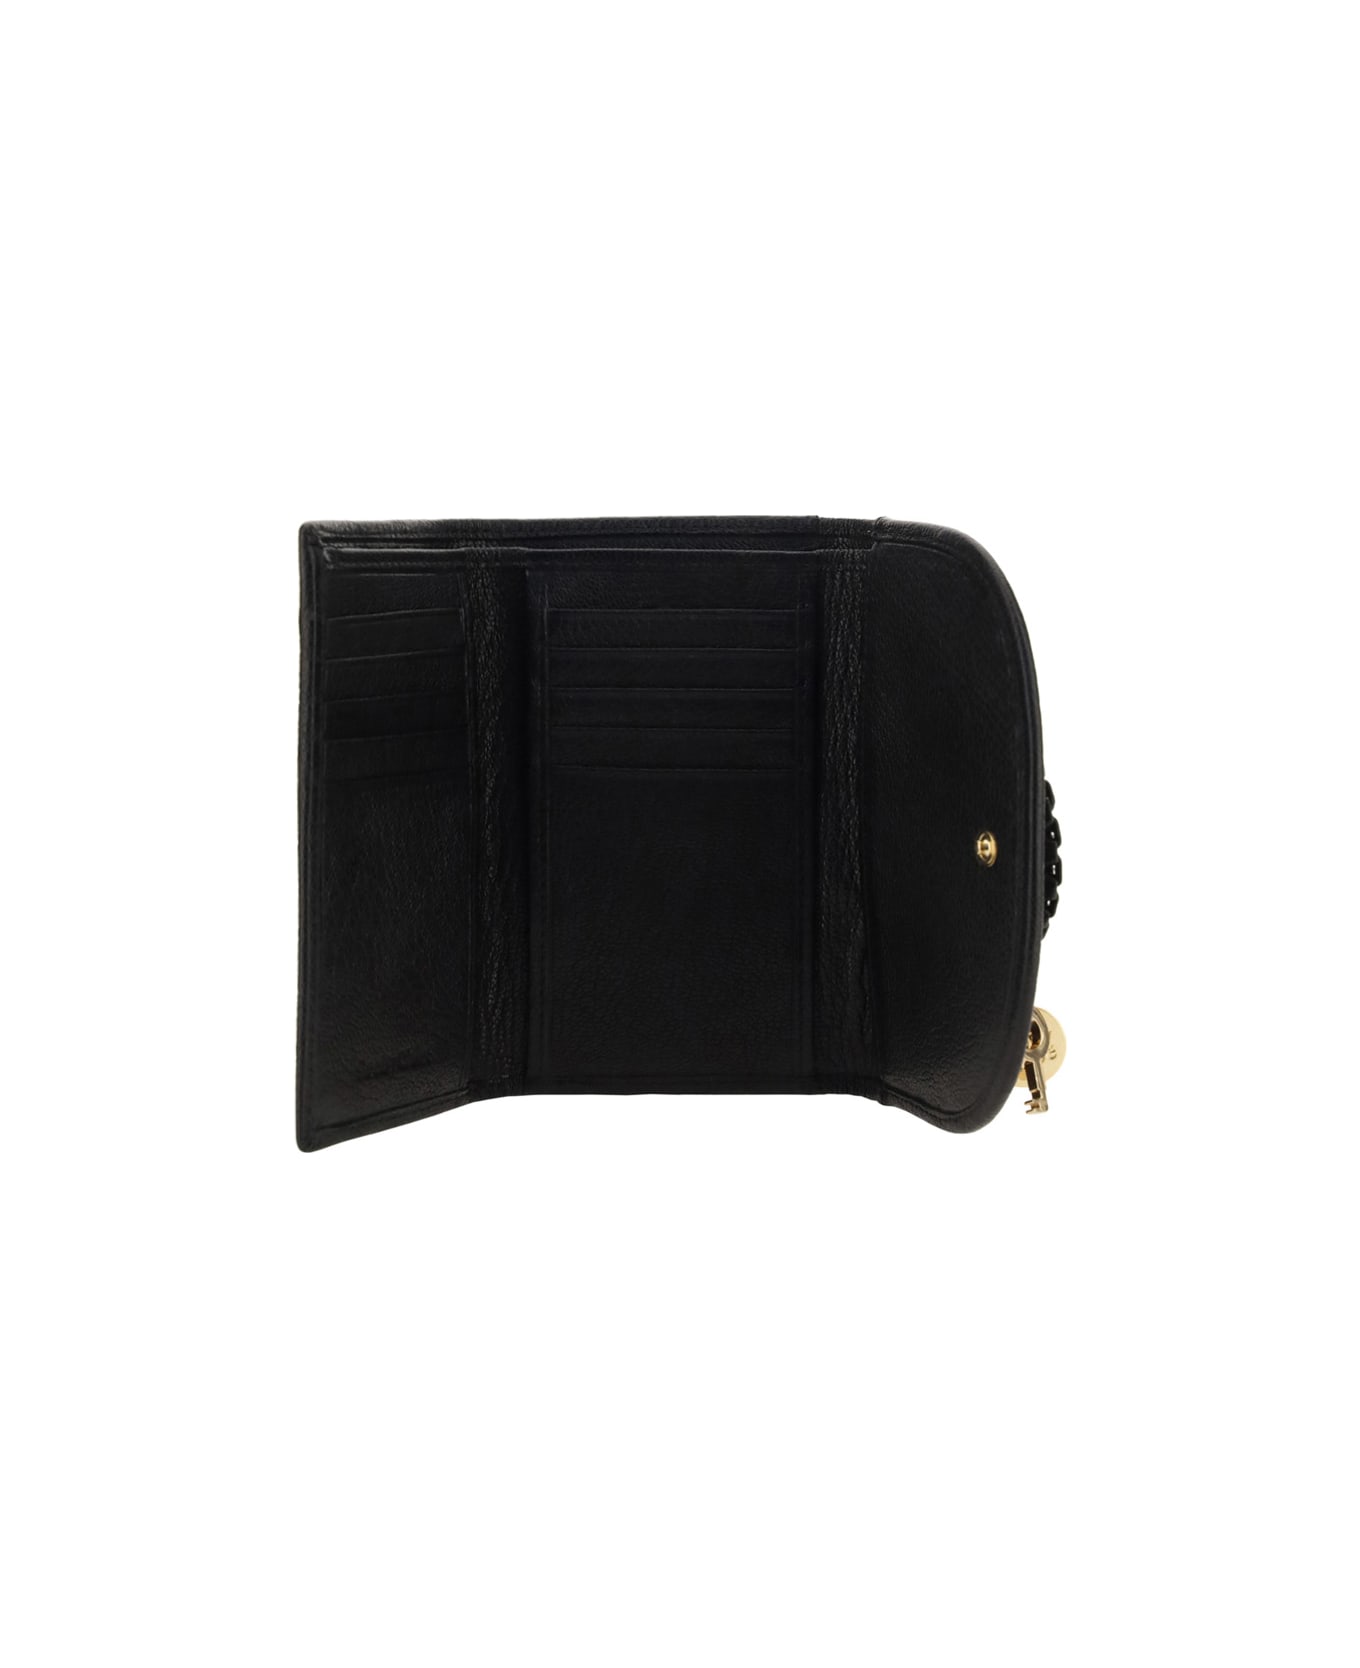 See by Chloé Hana Sbs Compact Wallet - Black